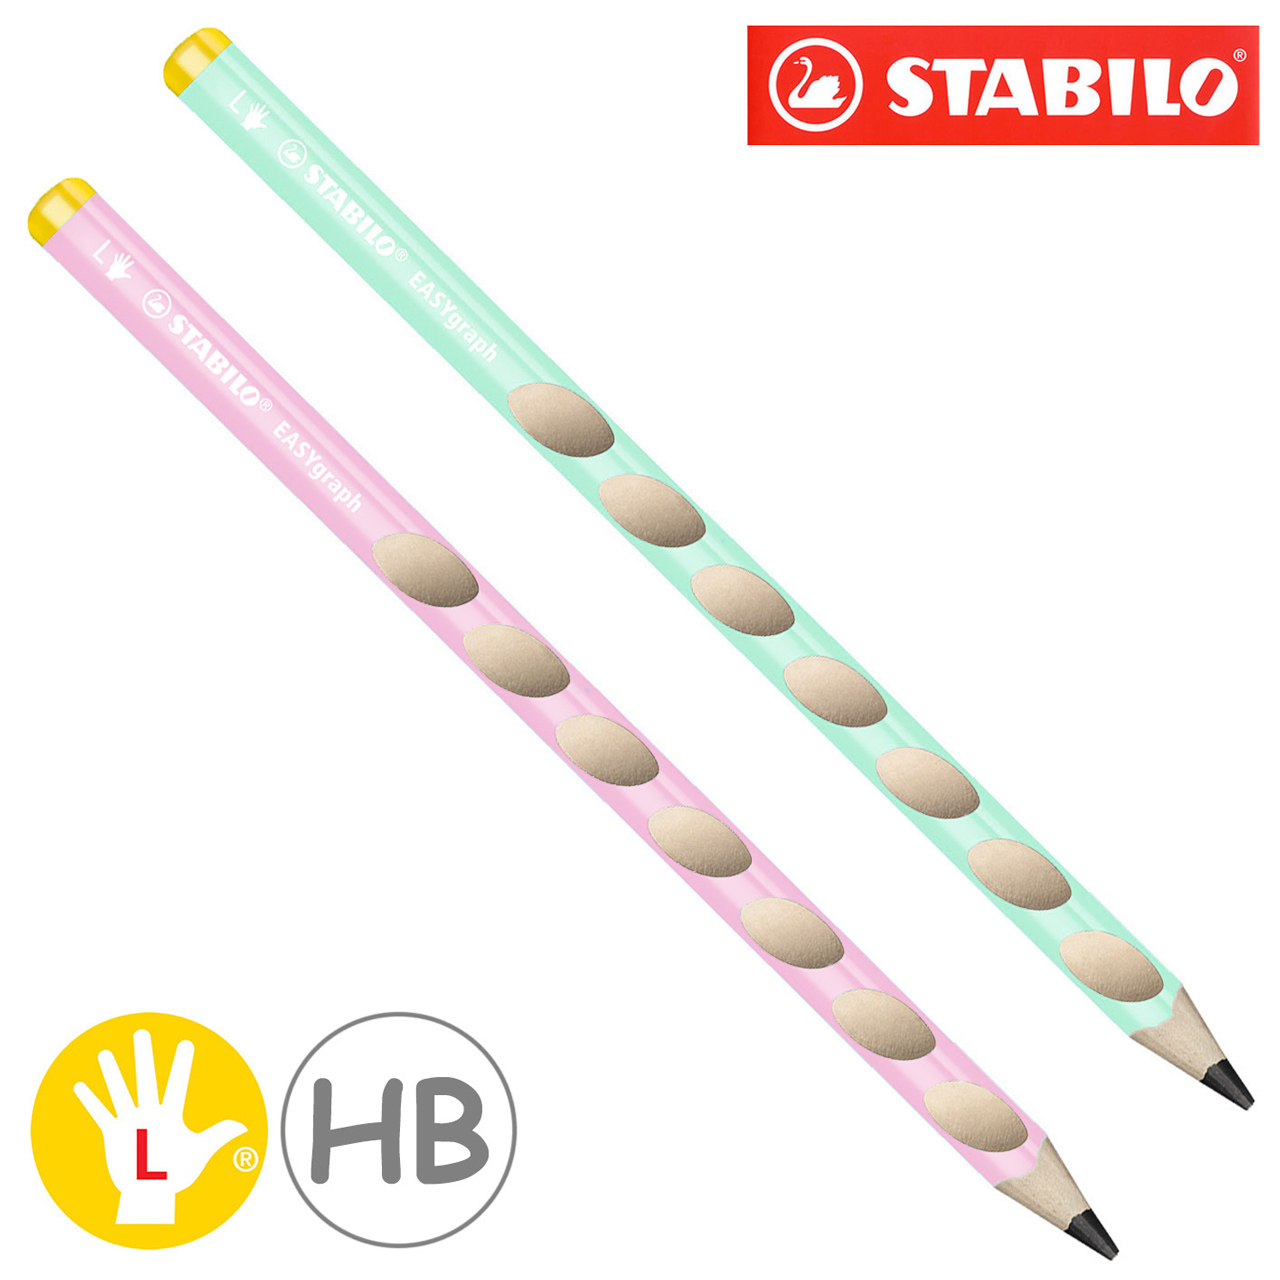 Stabilo-easy-graph-Bleistift-HB-pastell-gruen-pink-Linkshaender-lafueliki